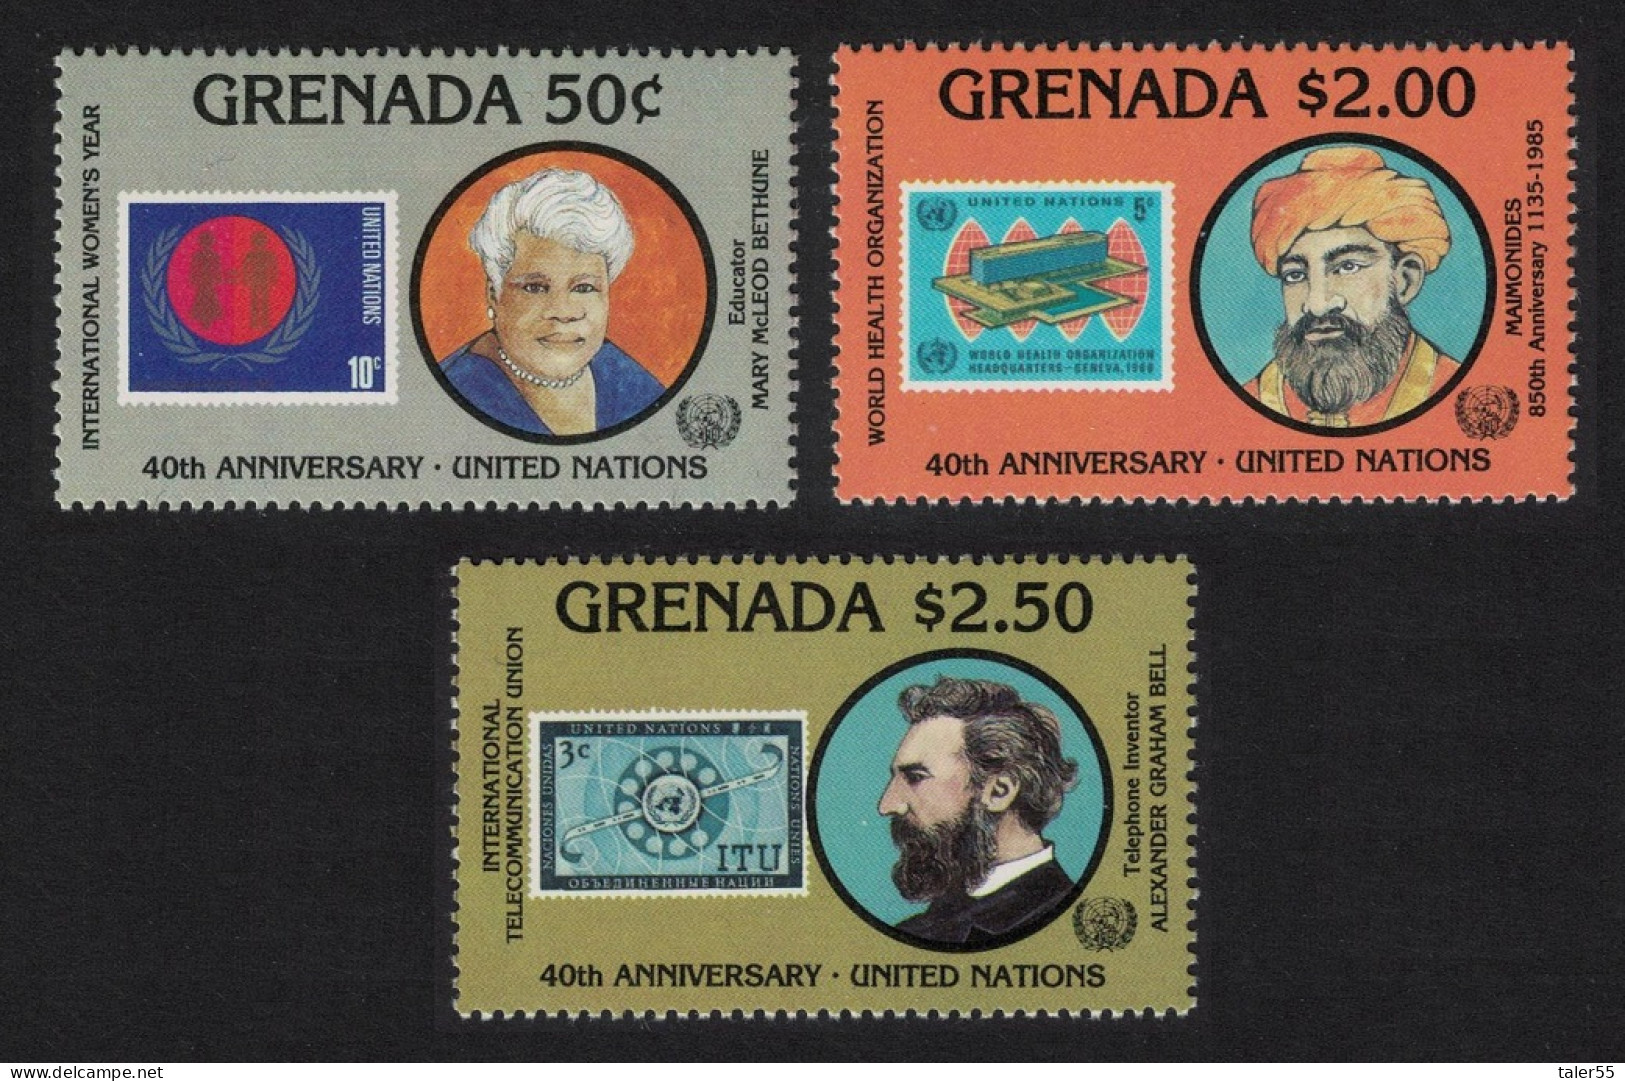 Grenada United Nations New York Stamps 3v 1985 MNH SG#1466-1468 - Grenada (1974-...)